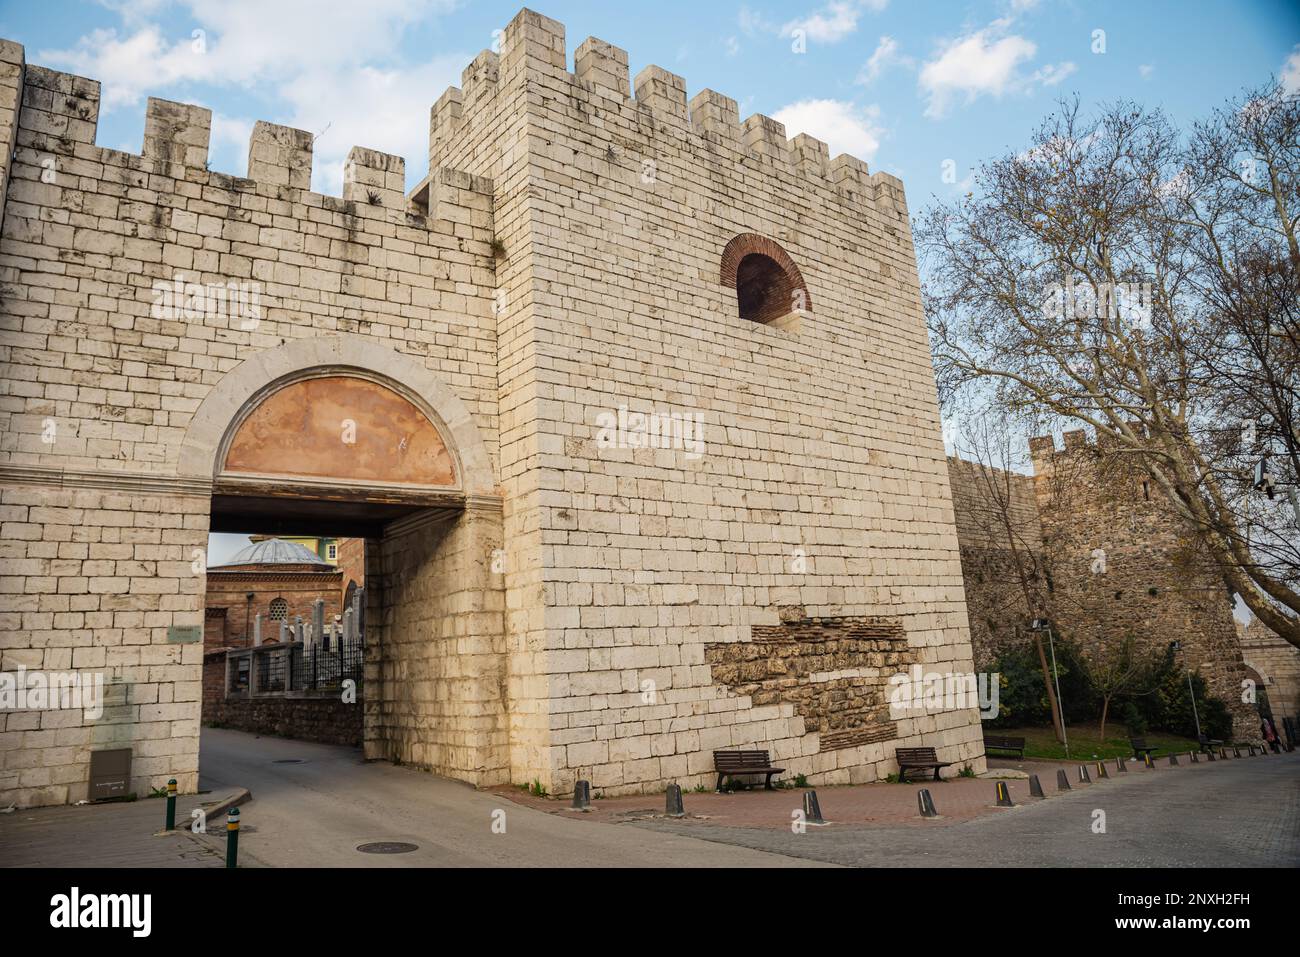 ancient ottoman castle gate photo in Bursa, Entrance of Tahtakale -sultanate- Gate of Bursa Castle Turkey. High quality photo Stock Photo